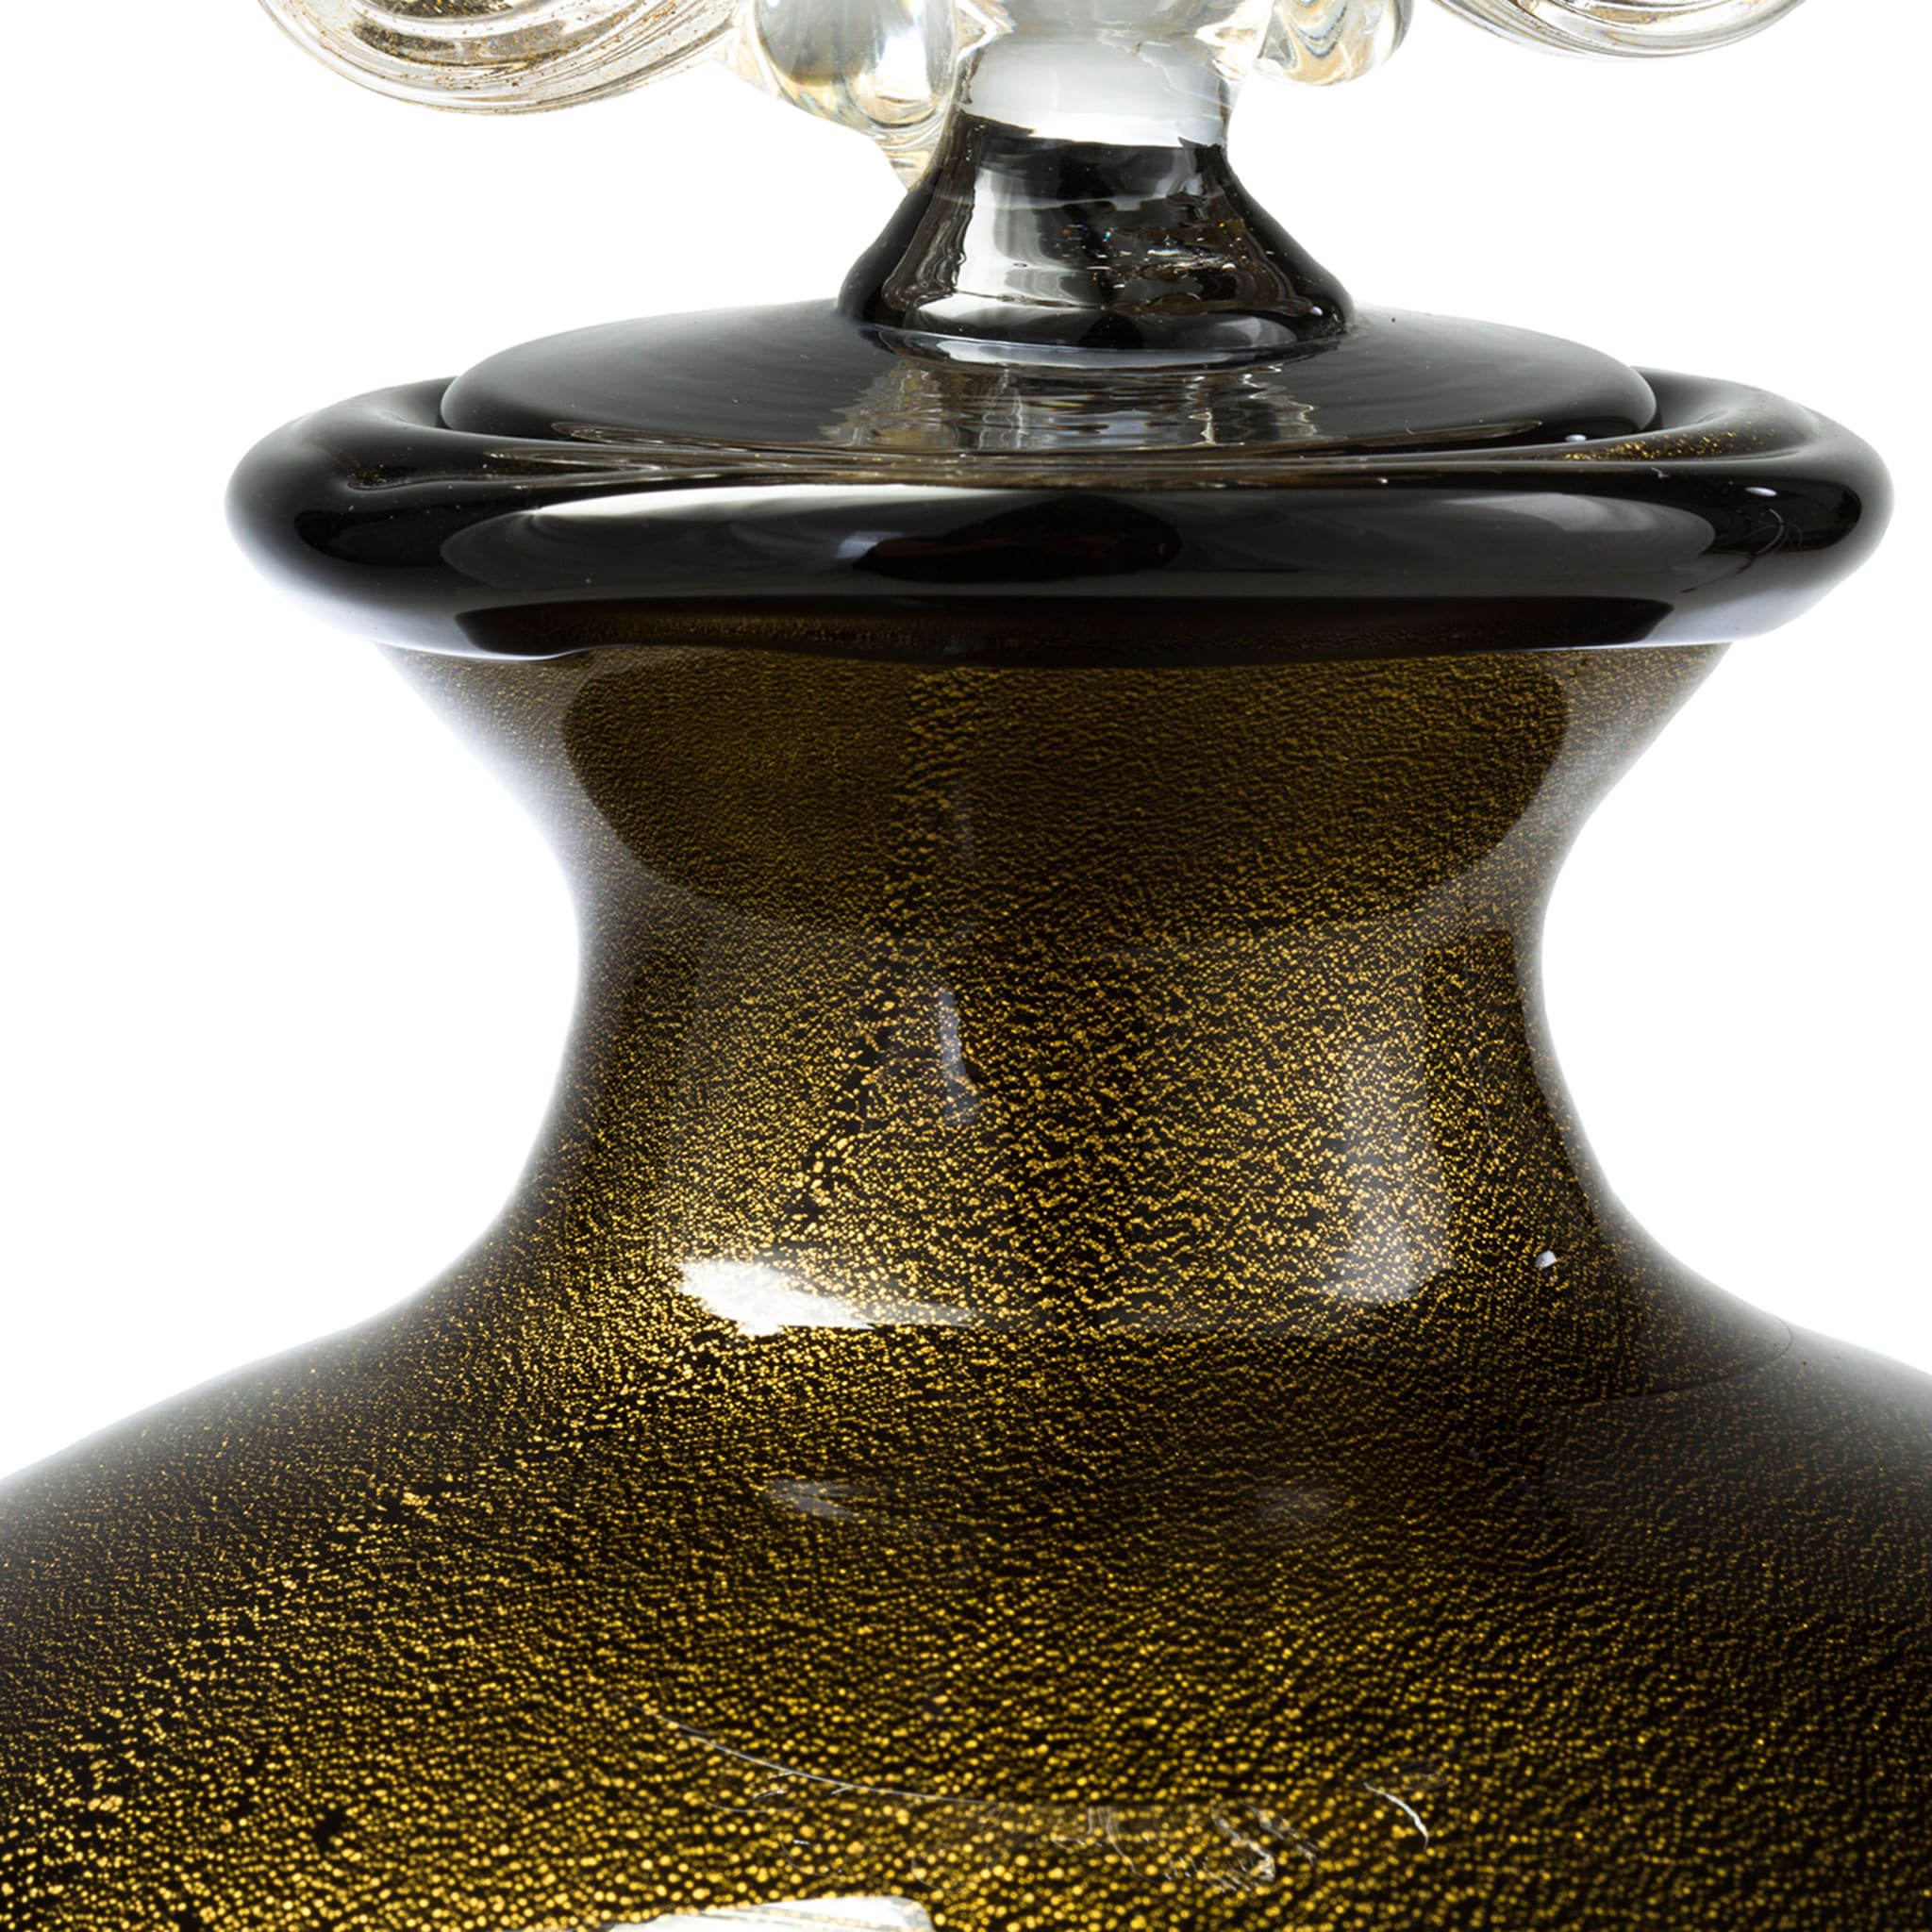 Stmat 24K Black & Gold Footed Vase with Lid - Alternative view 3